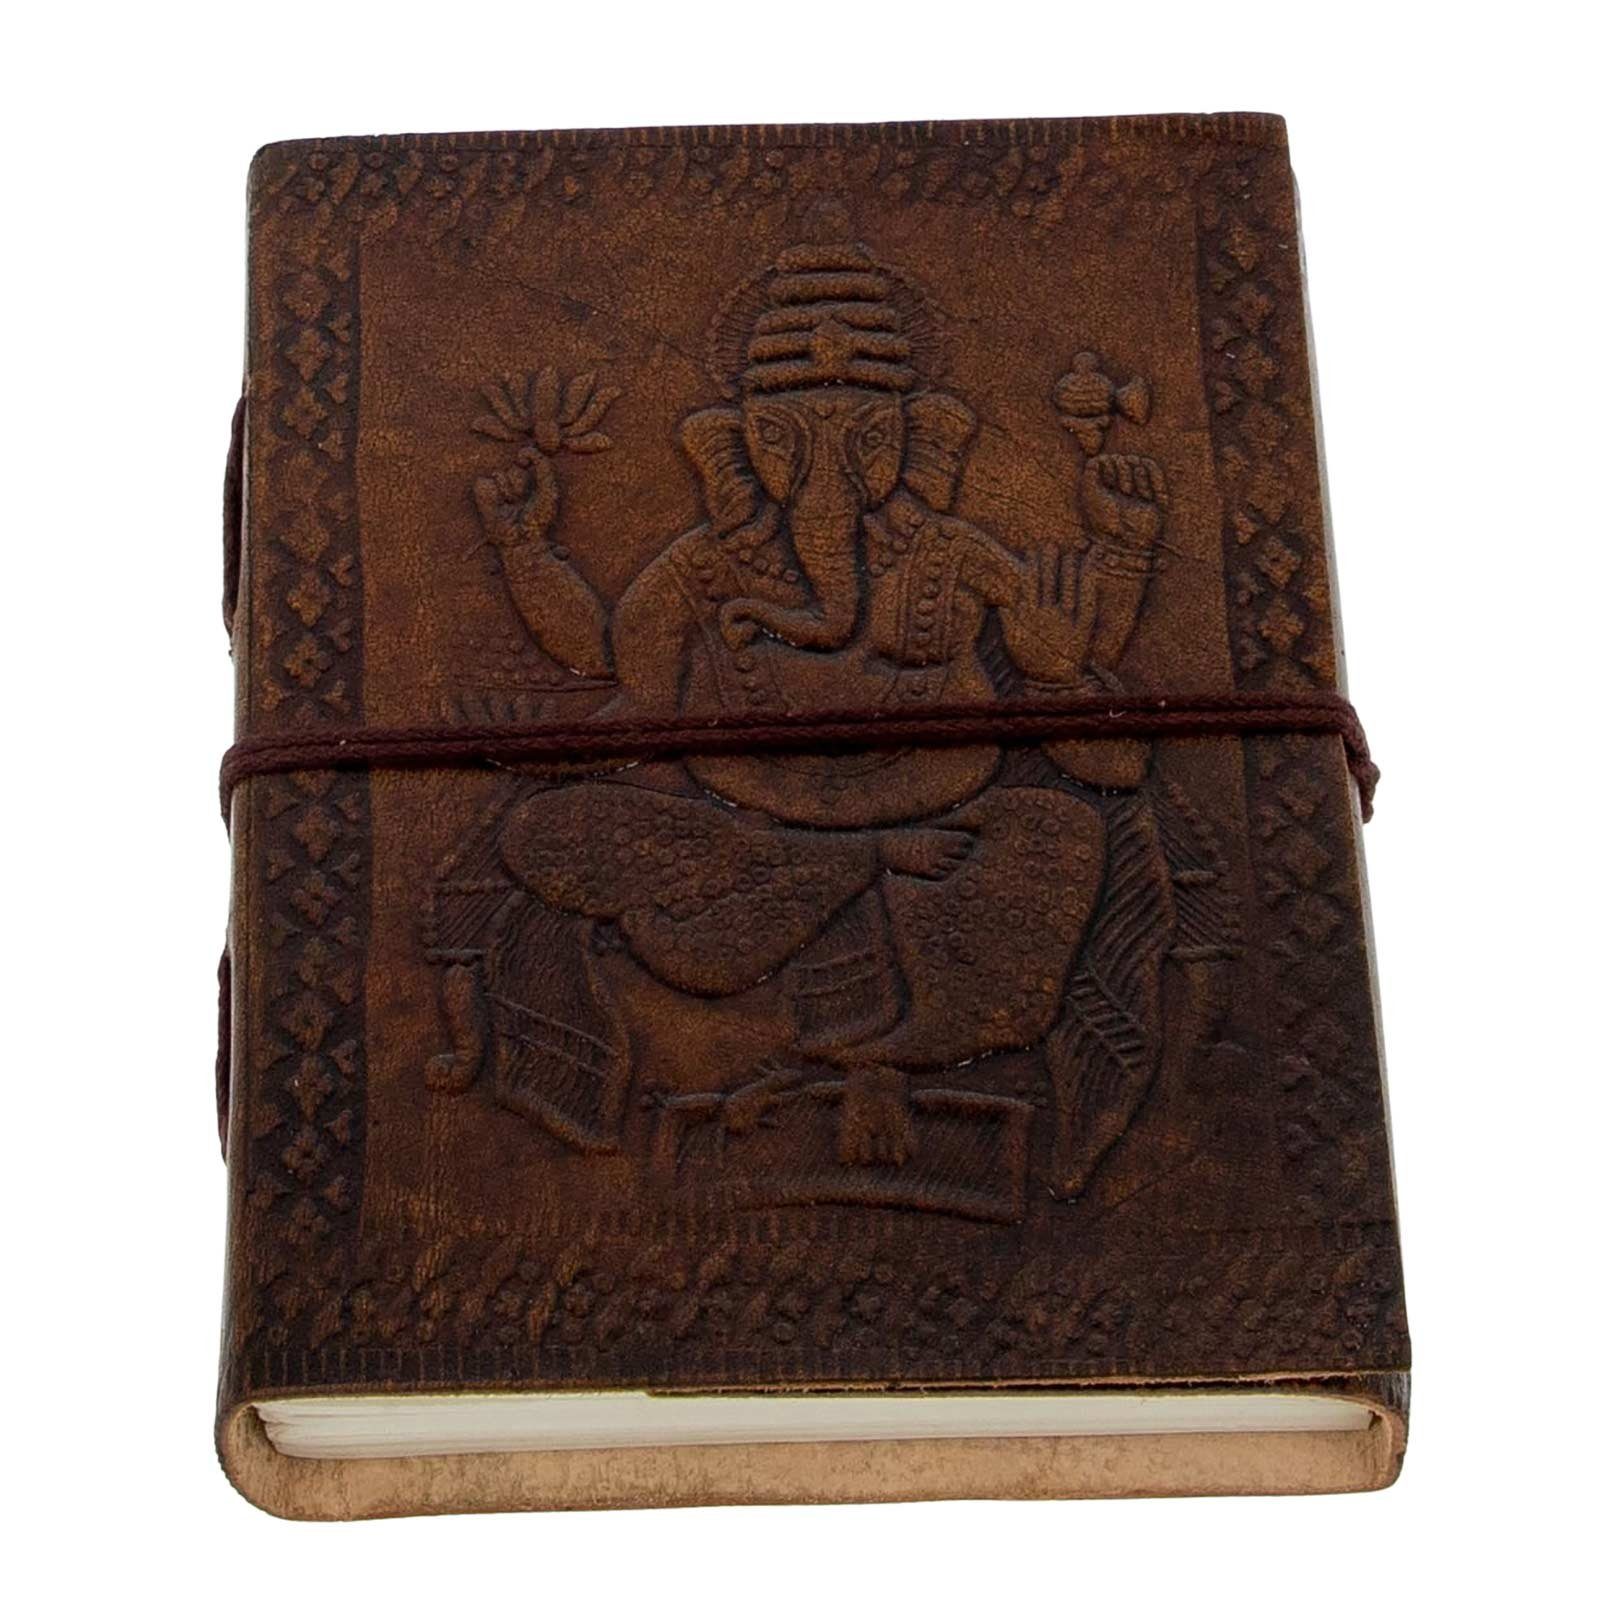 Tagebuch Notizbuch MAGIE Leder KUNST Ganesha UND Tagebuch 11,5x15cm handgefertigt Lord